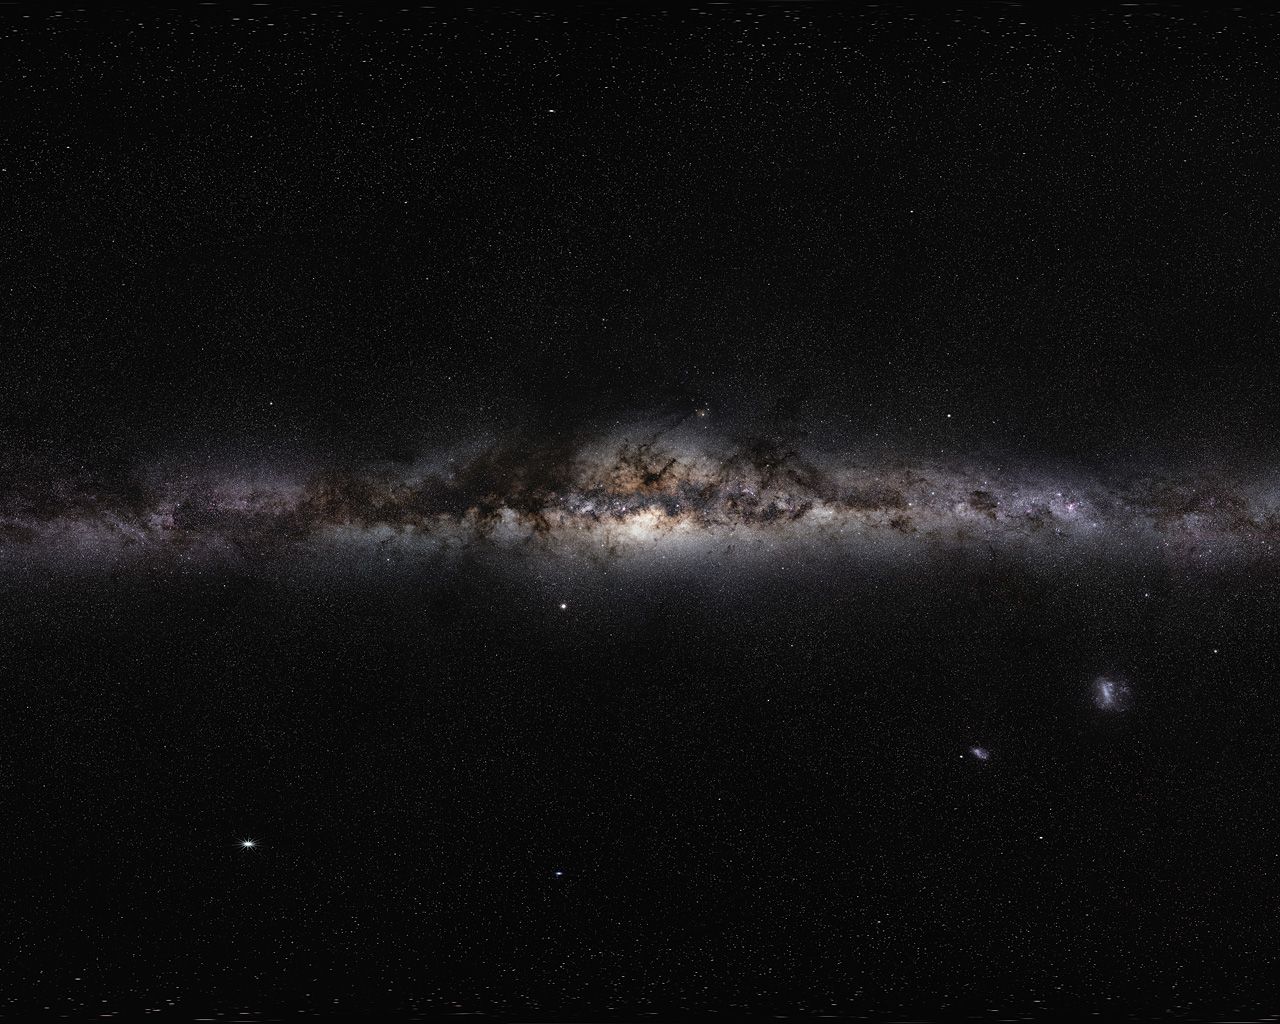 Milky Way Phone Wallpapers